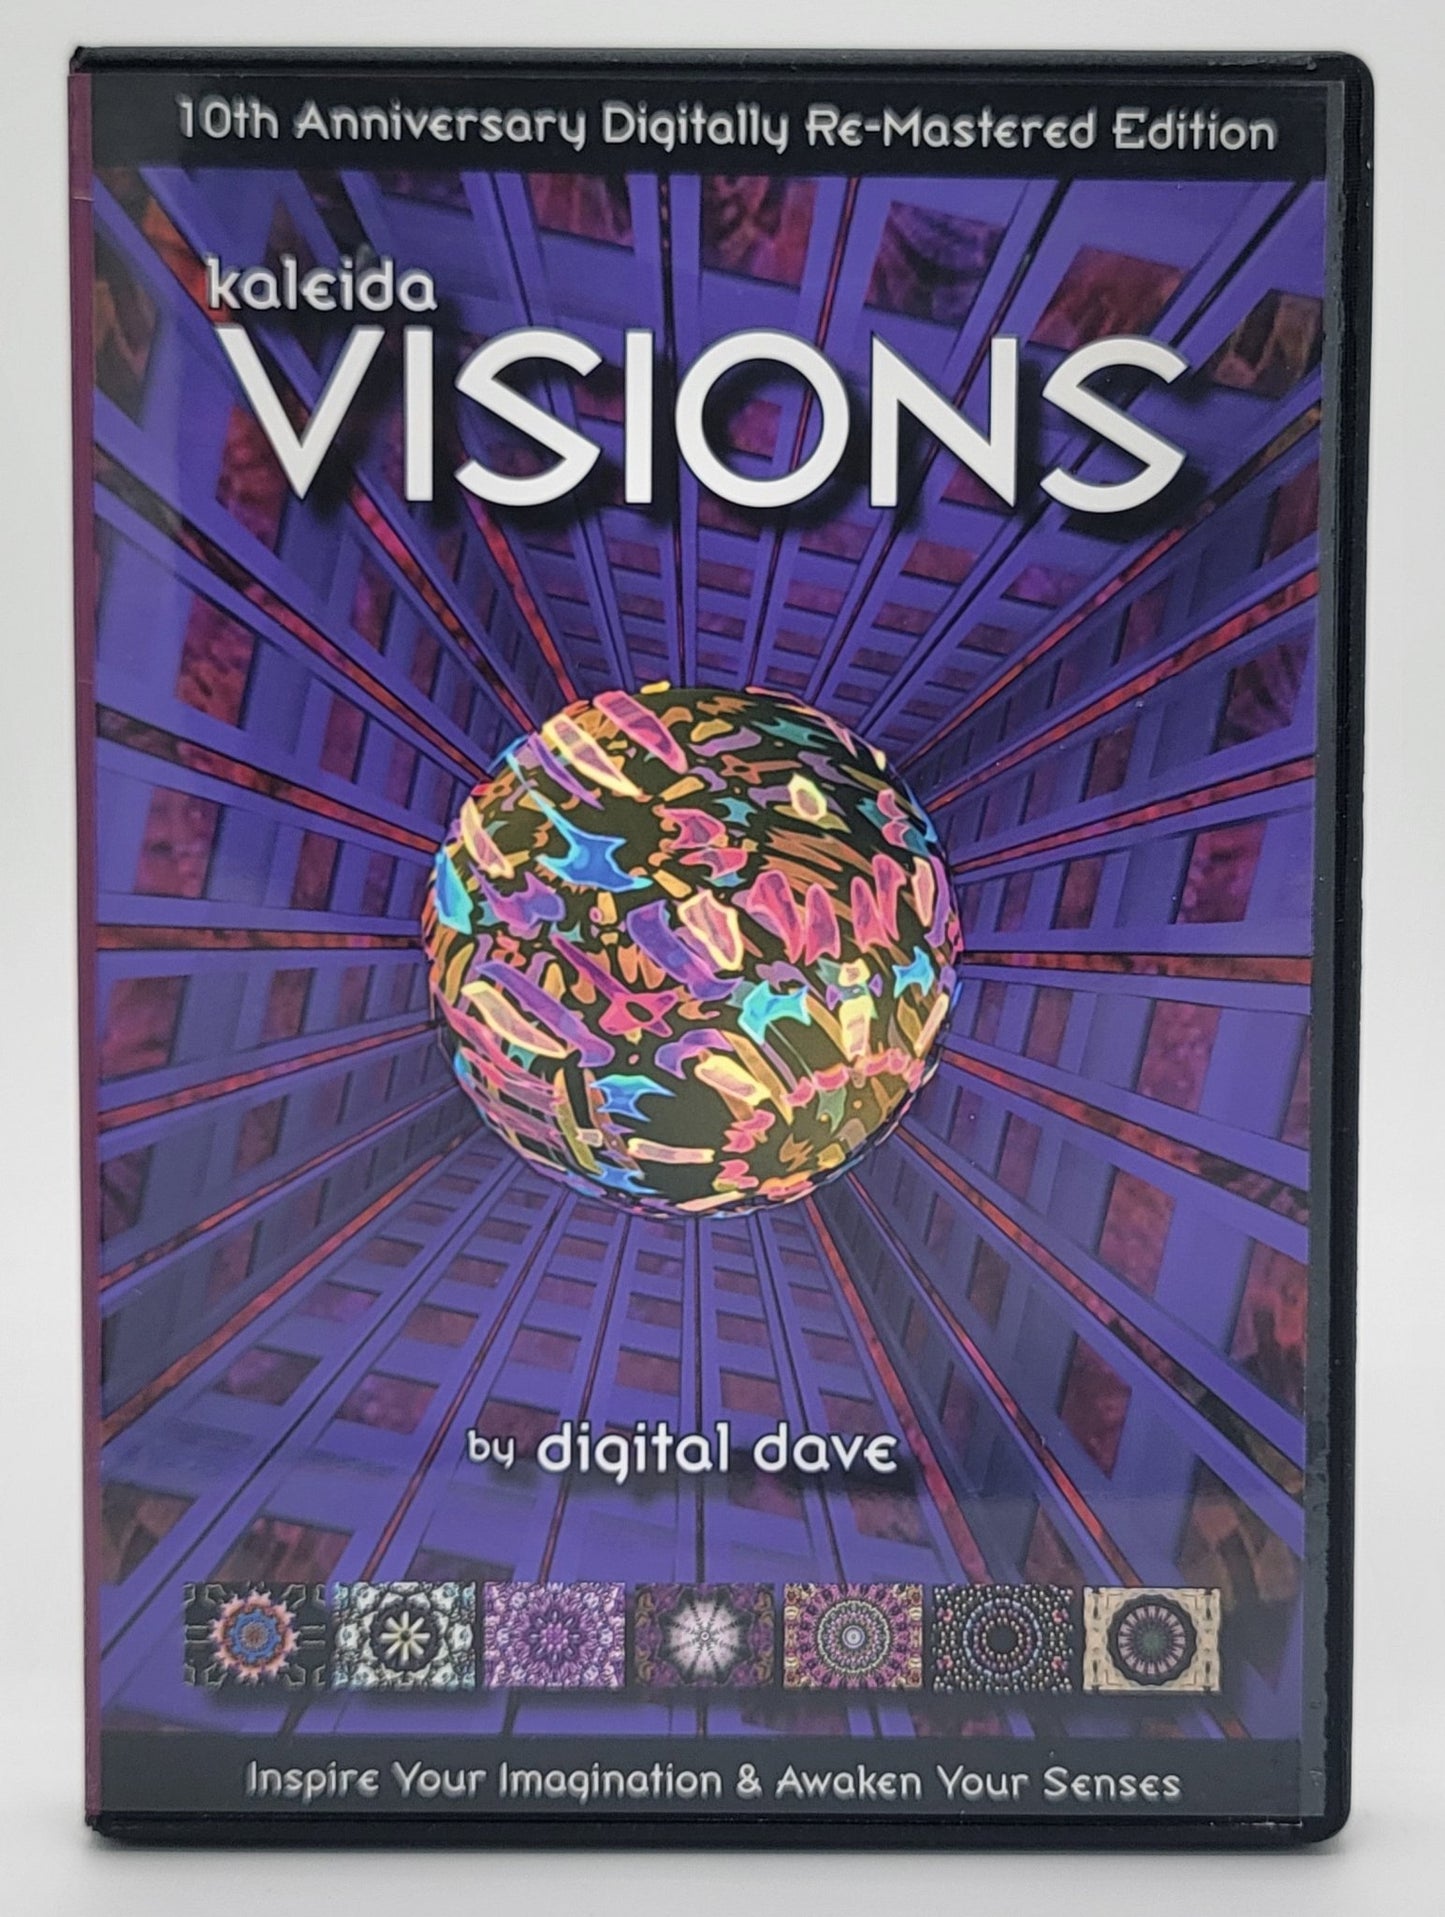 Digital Dave - Kaleida Visions by Digital Dave | DVD | 10th Anniversary Digitally Re-Mastered Edition - DVD - Steady Bunny Shop